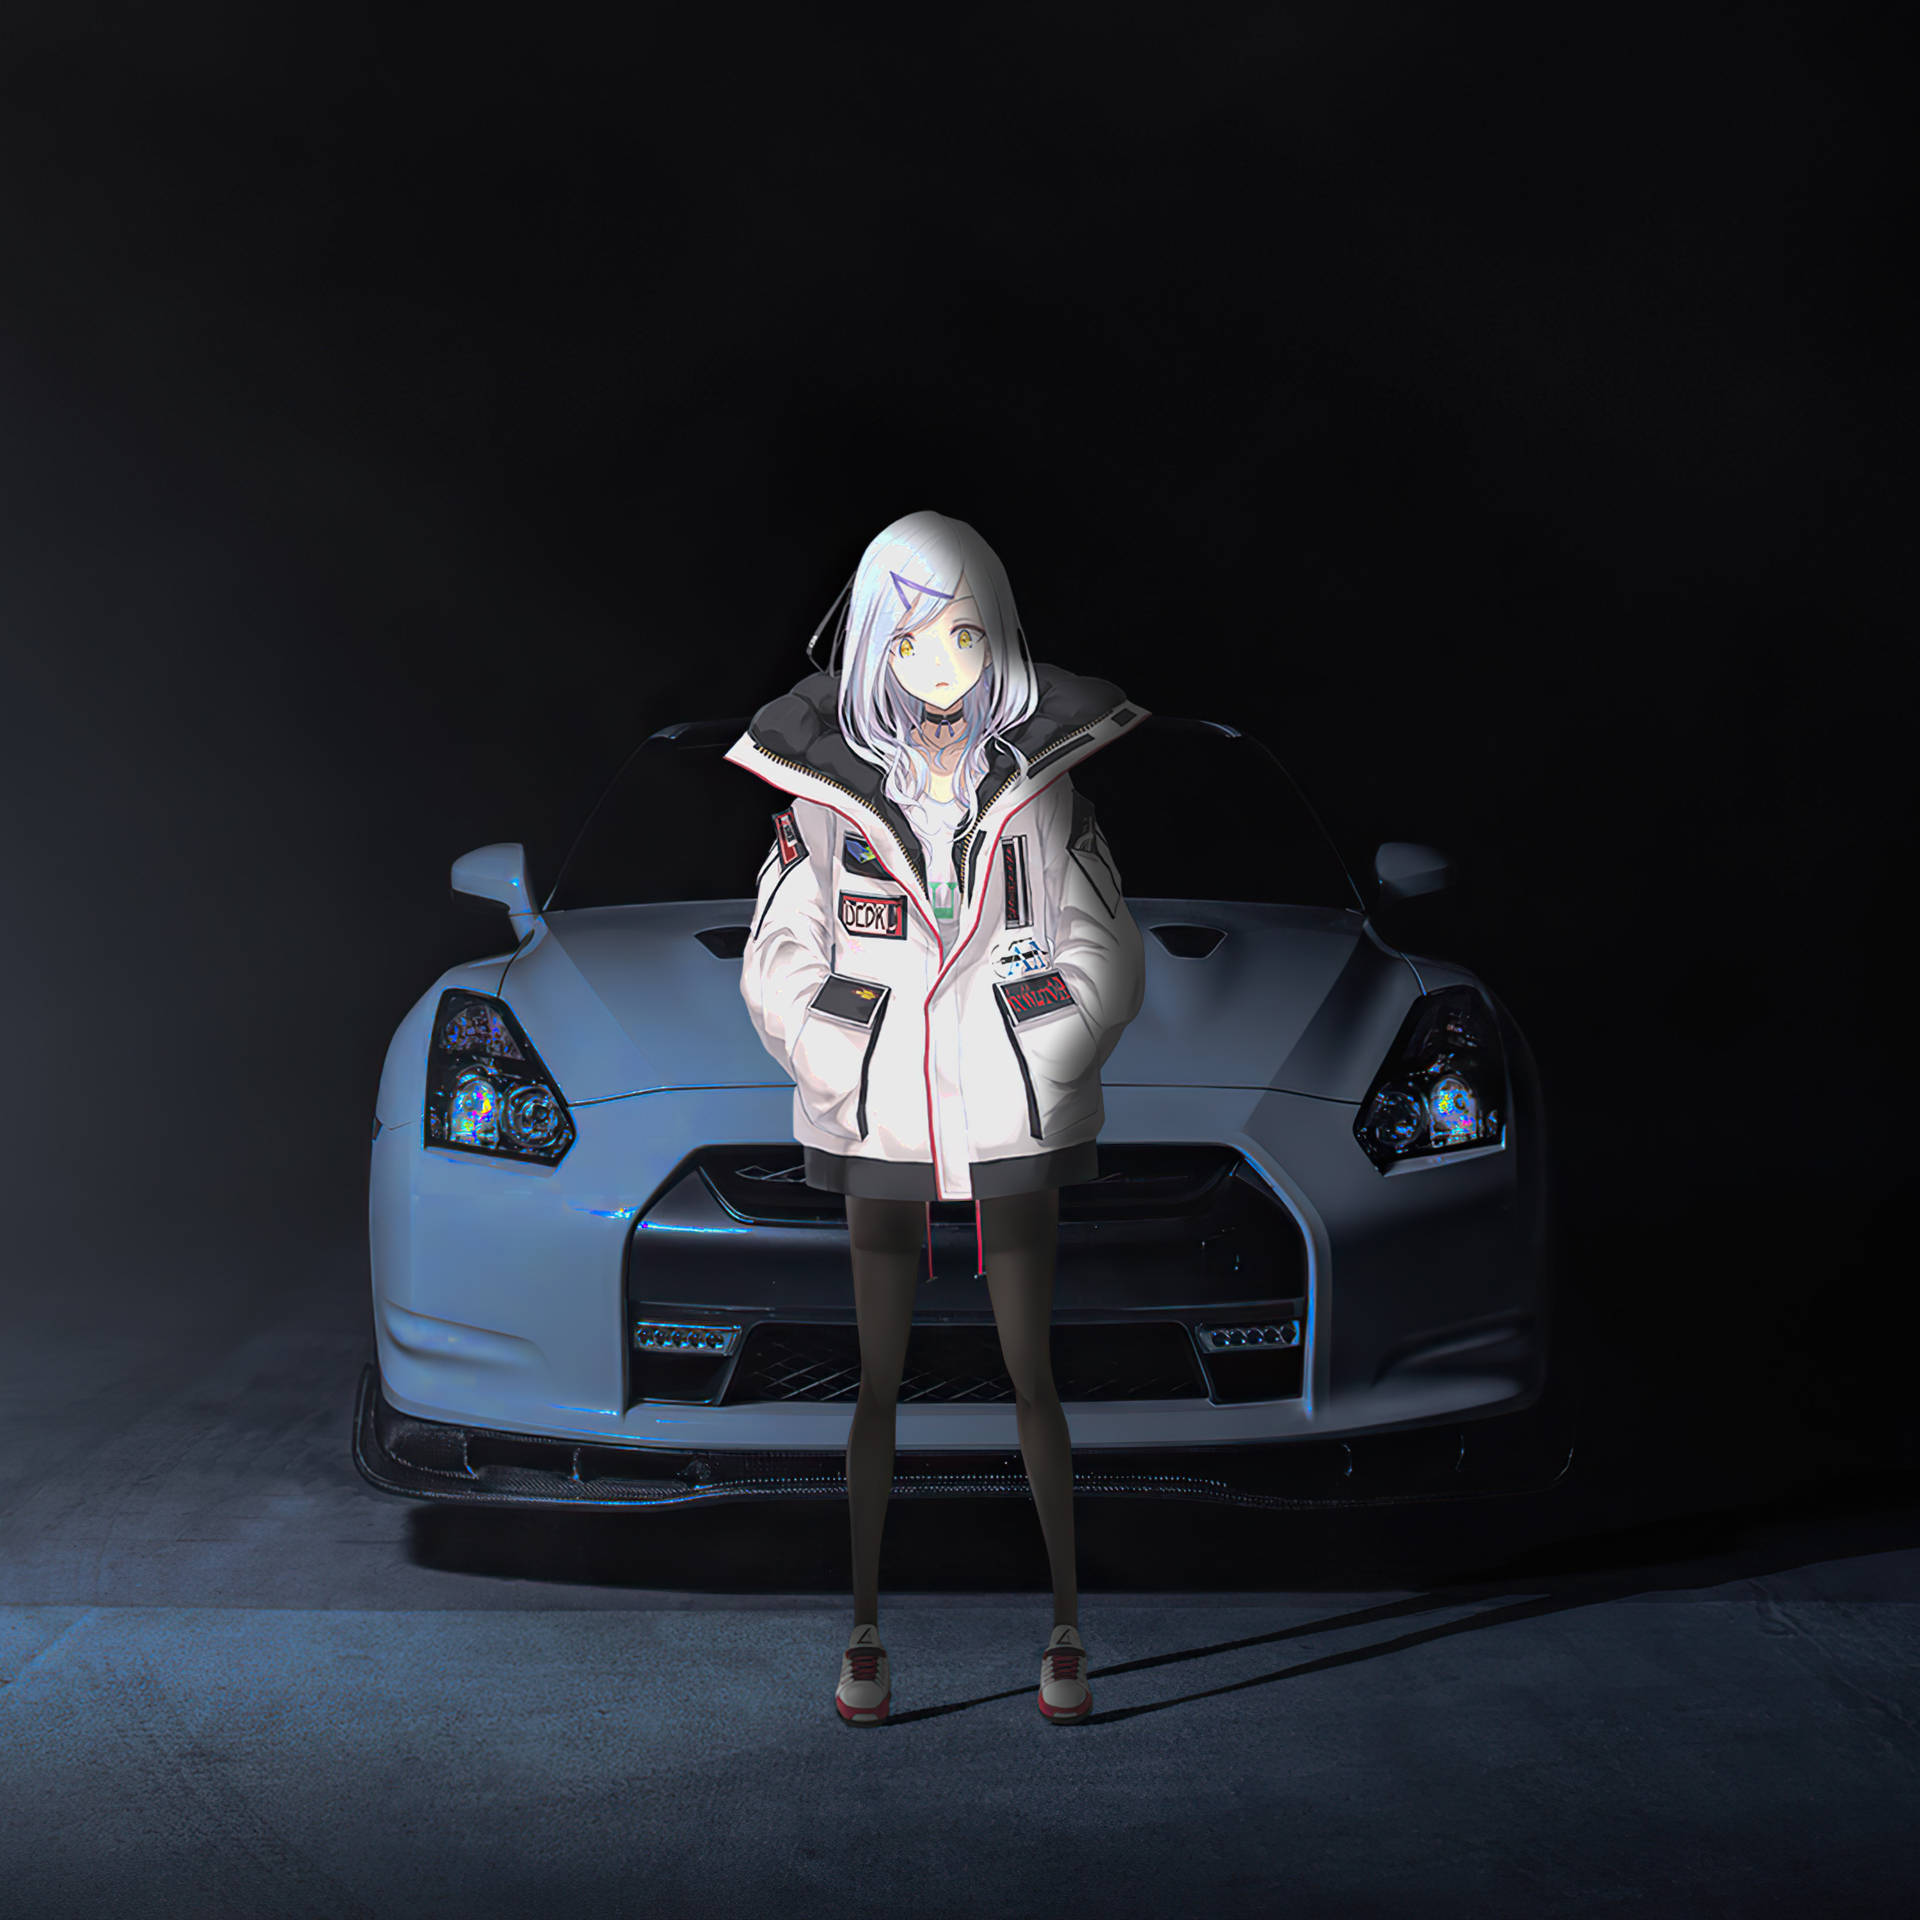 Anime IPad Girl With Car Wallpaper